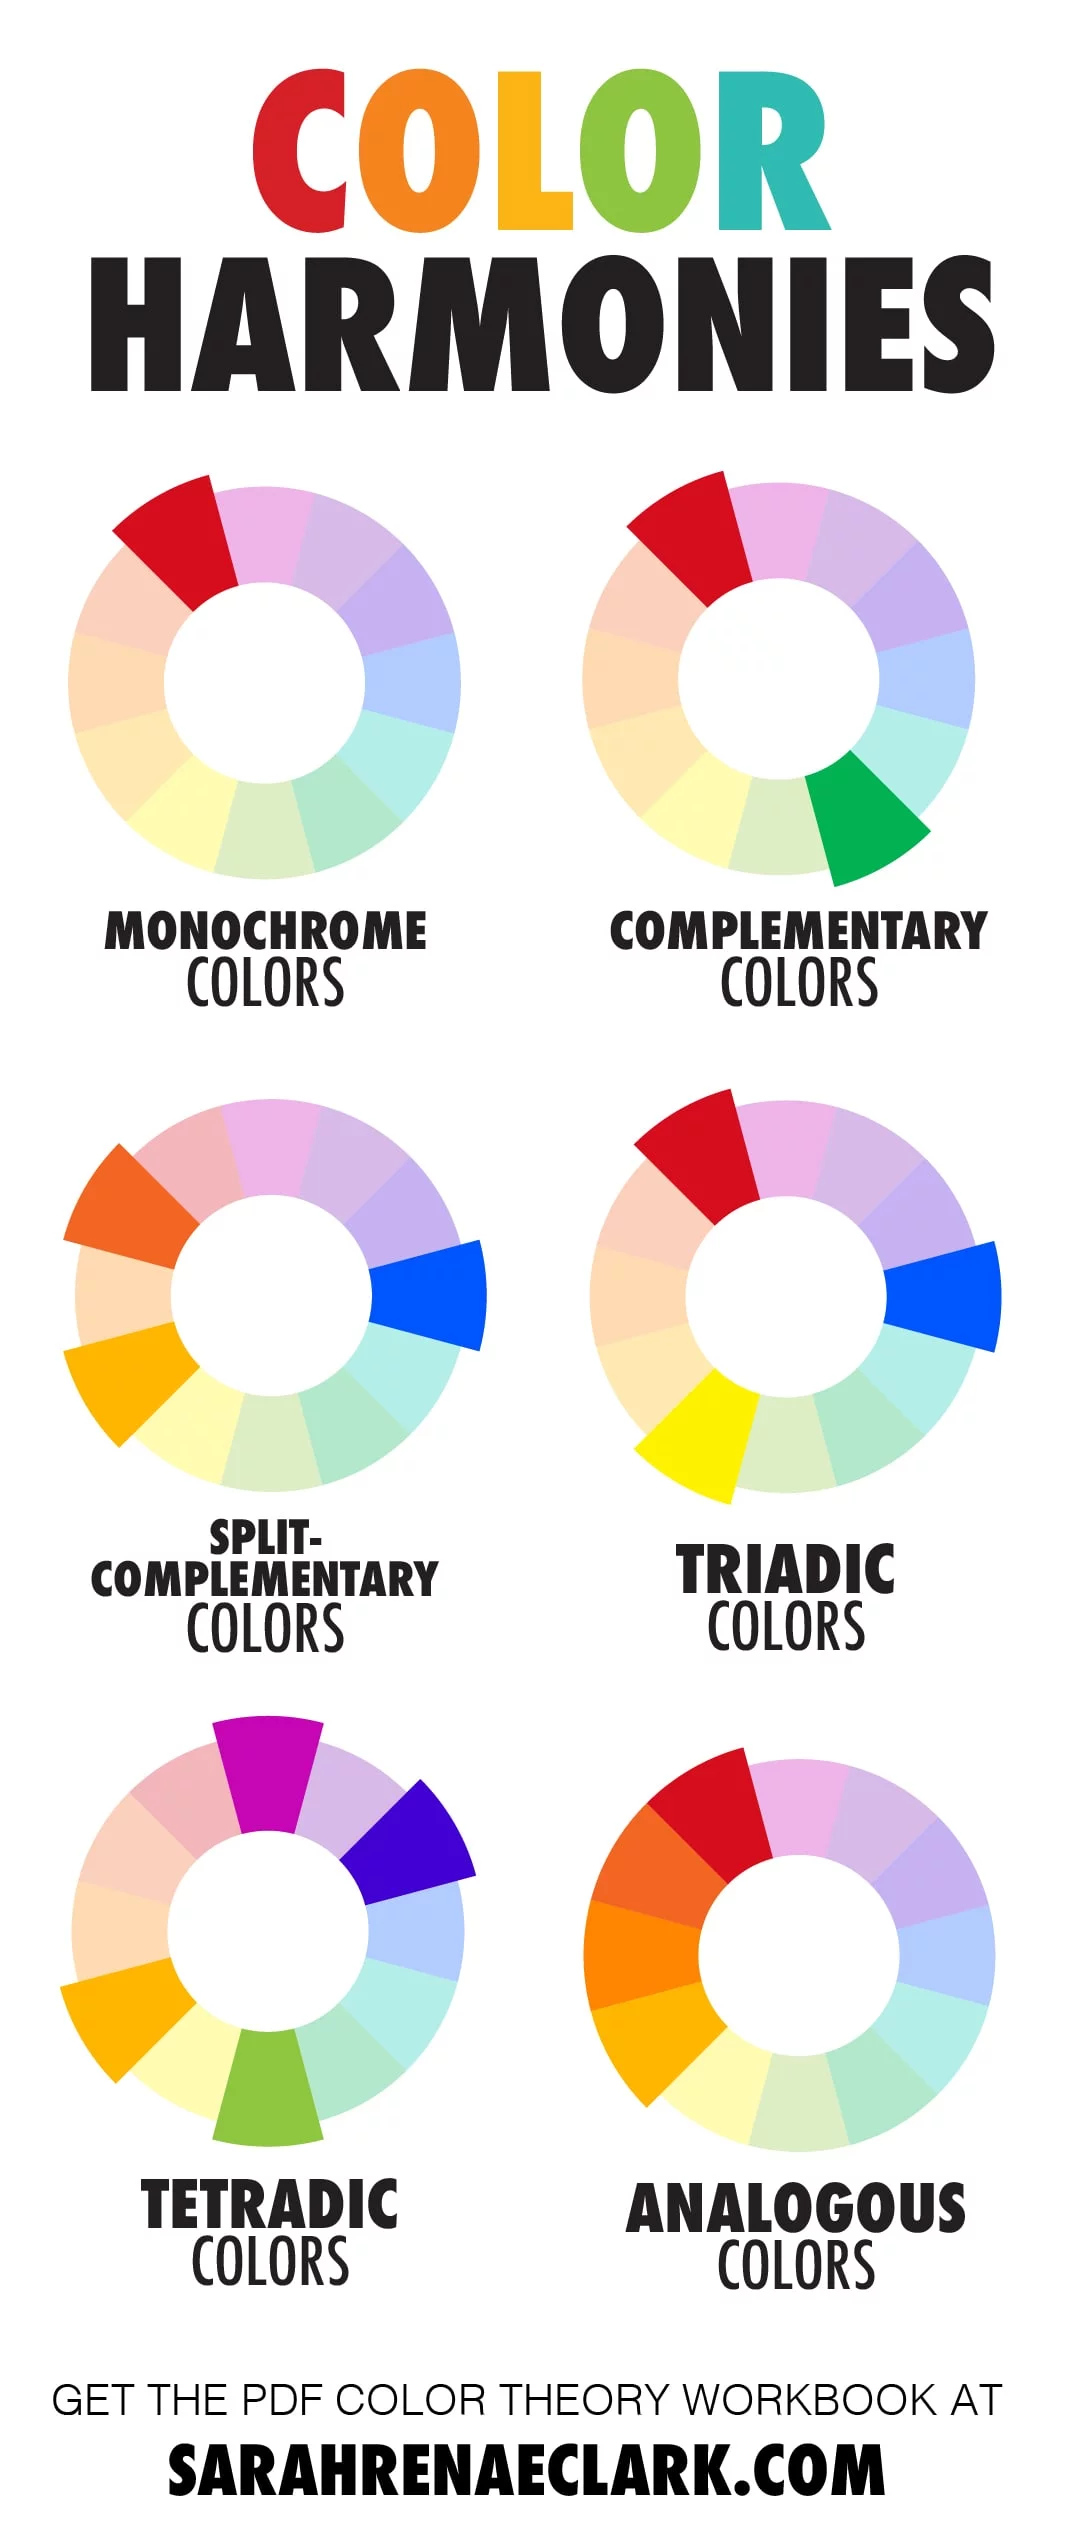 Theory Basics: The Color Wheel